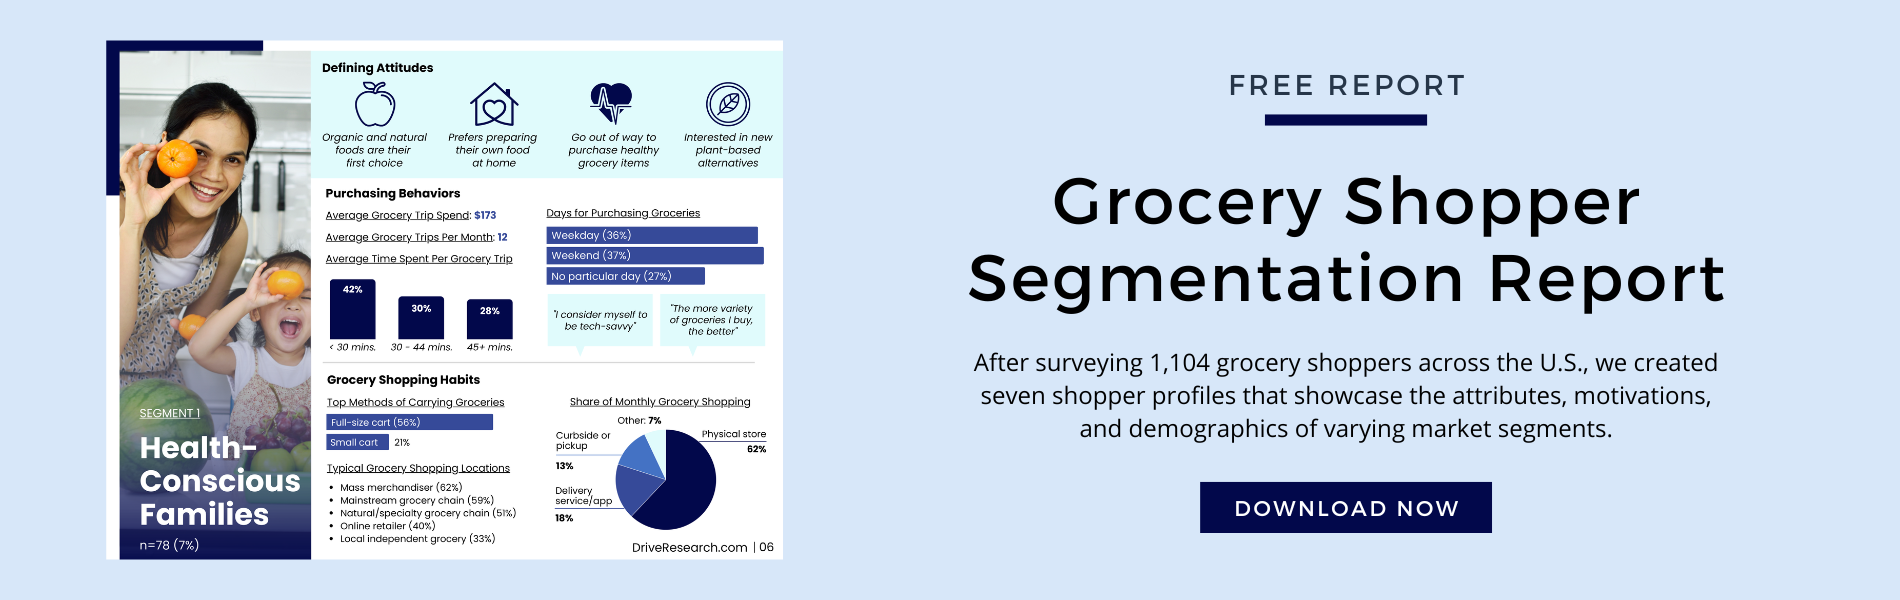 Grocery Shopper Segmentation Report Download